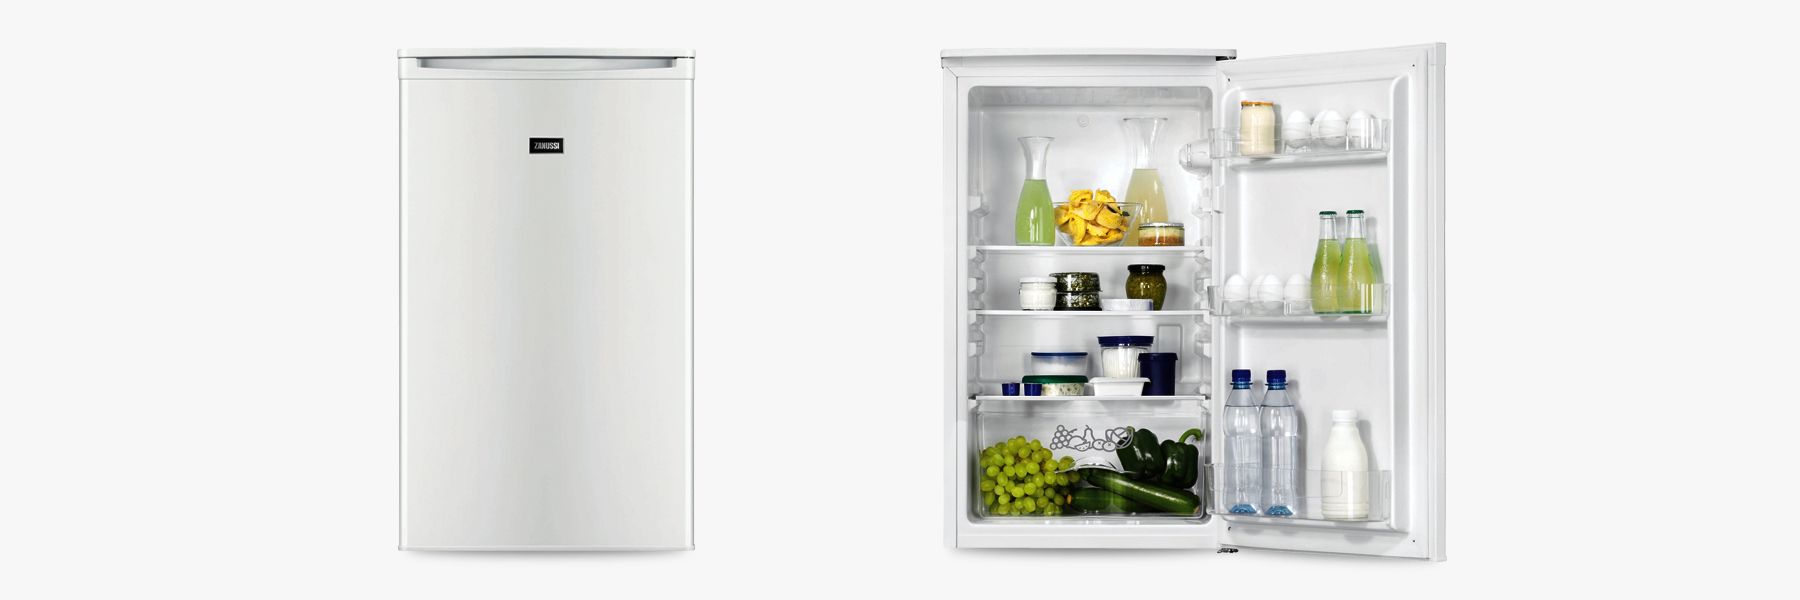 larder-fridges